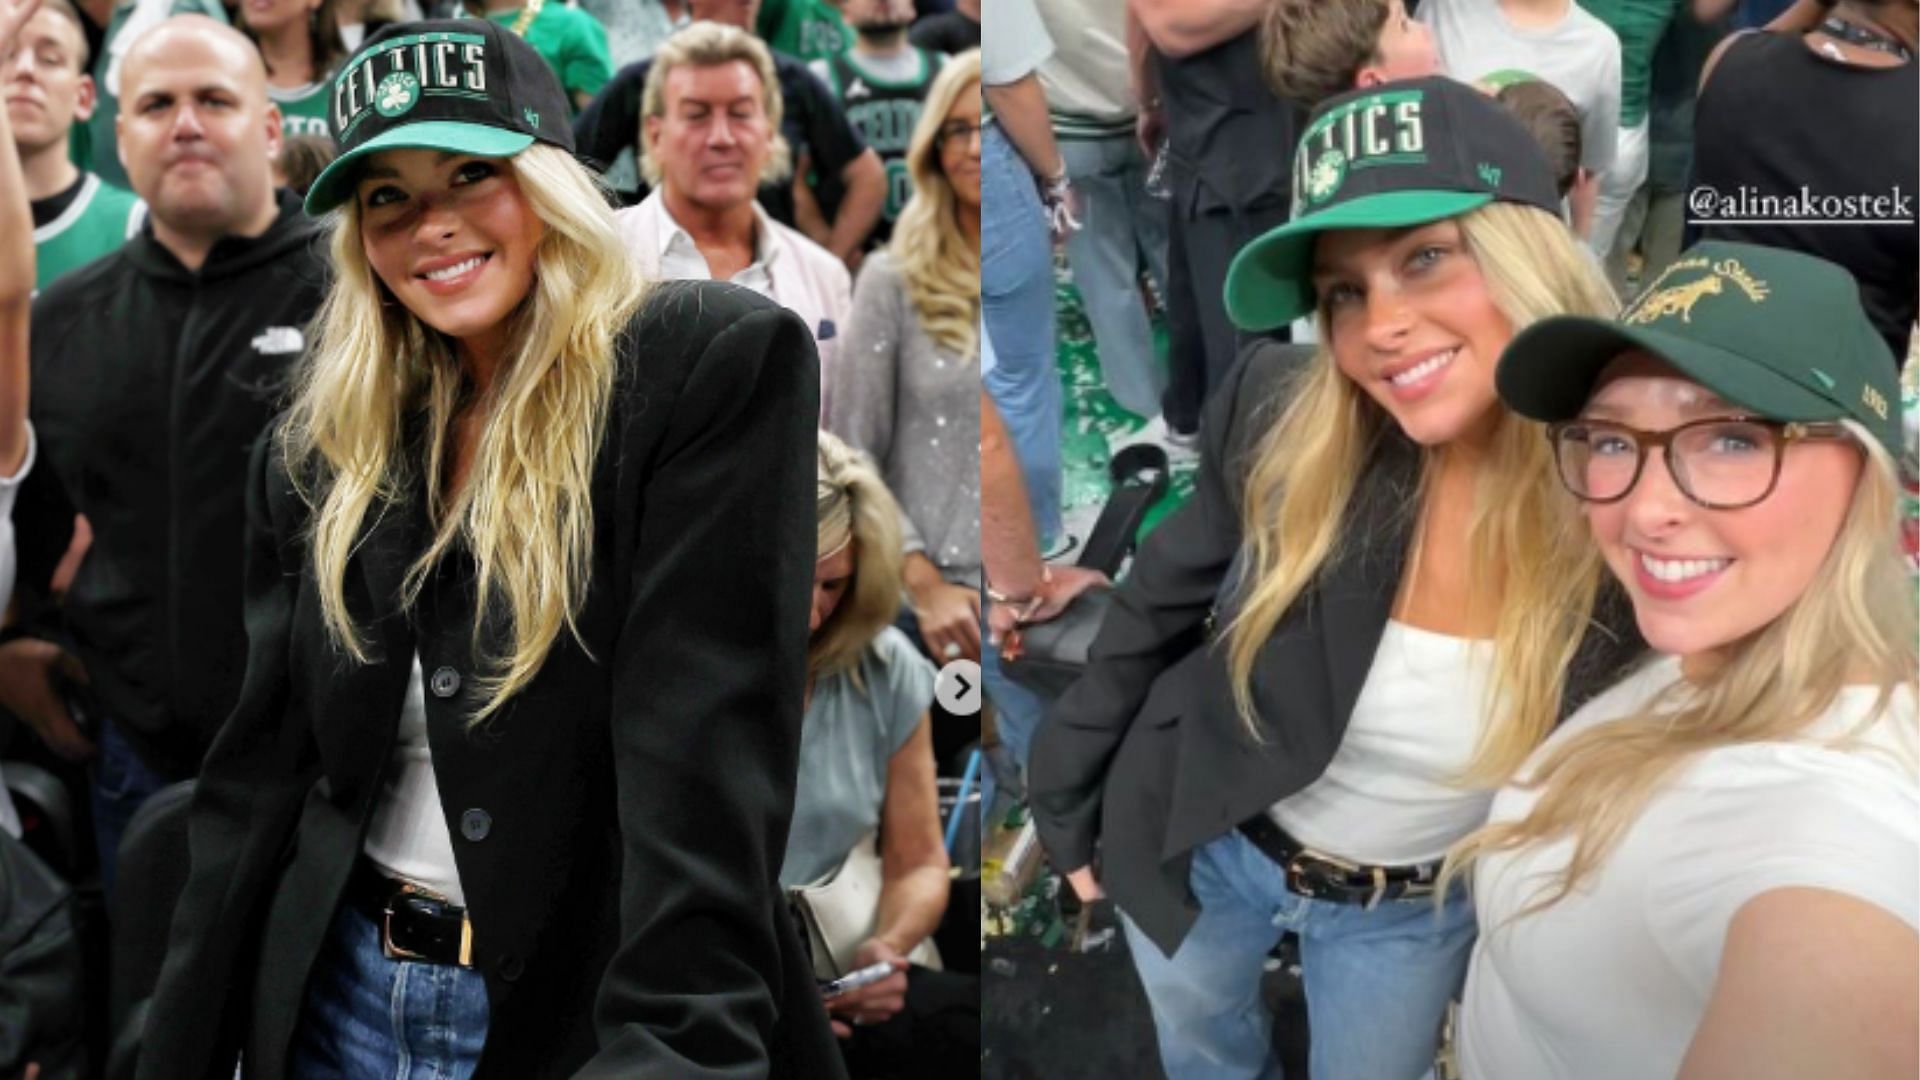 Camille Kostek celebrated the Boston Celtics title win alongside her sister. (Photos courtesy of NBA